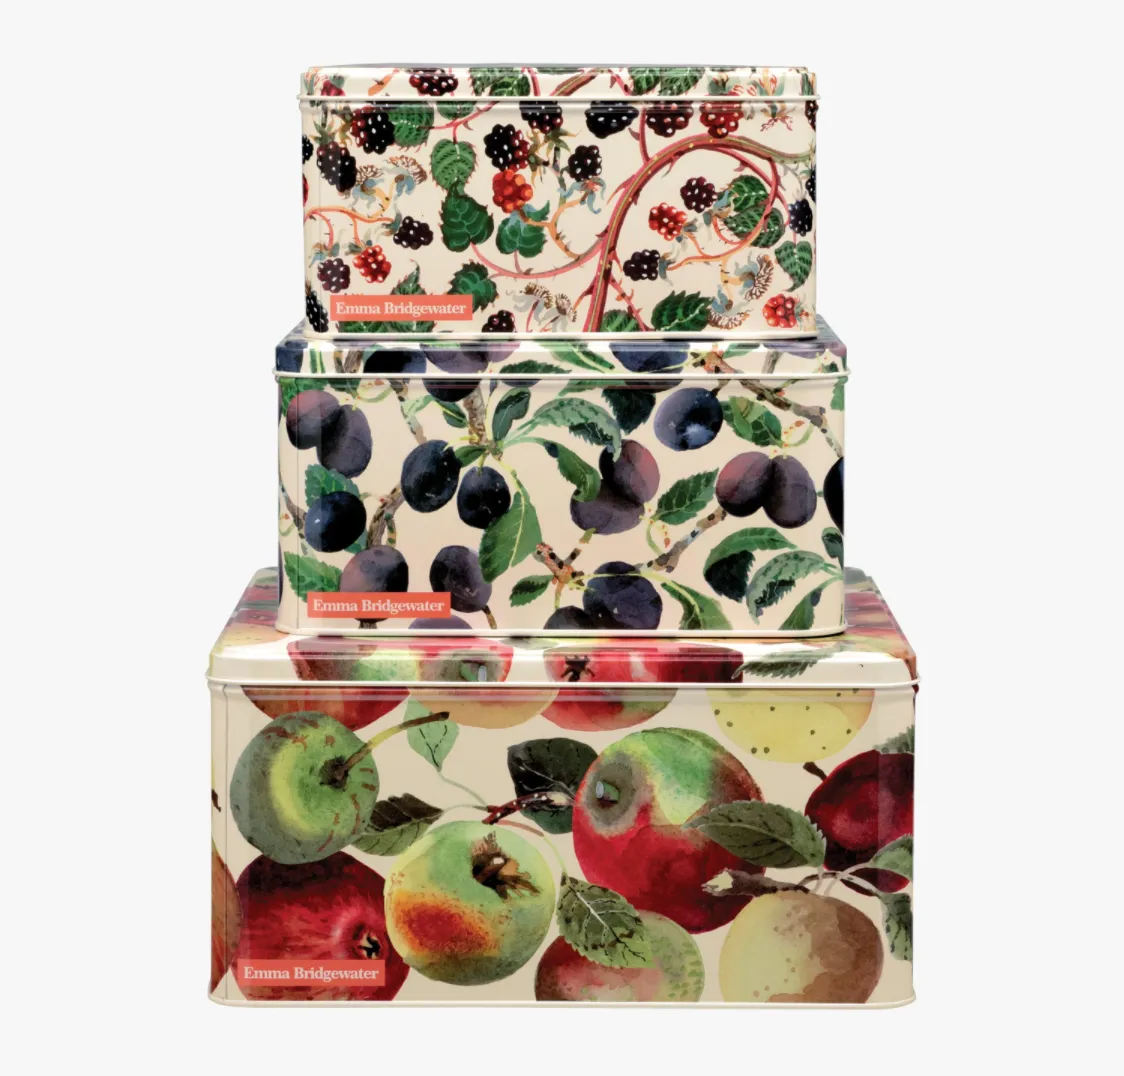 Vegetable Garden Apples Set of 3 Square Cake Tins Emma Bridgewater